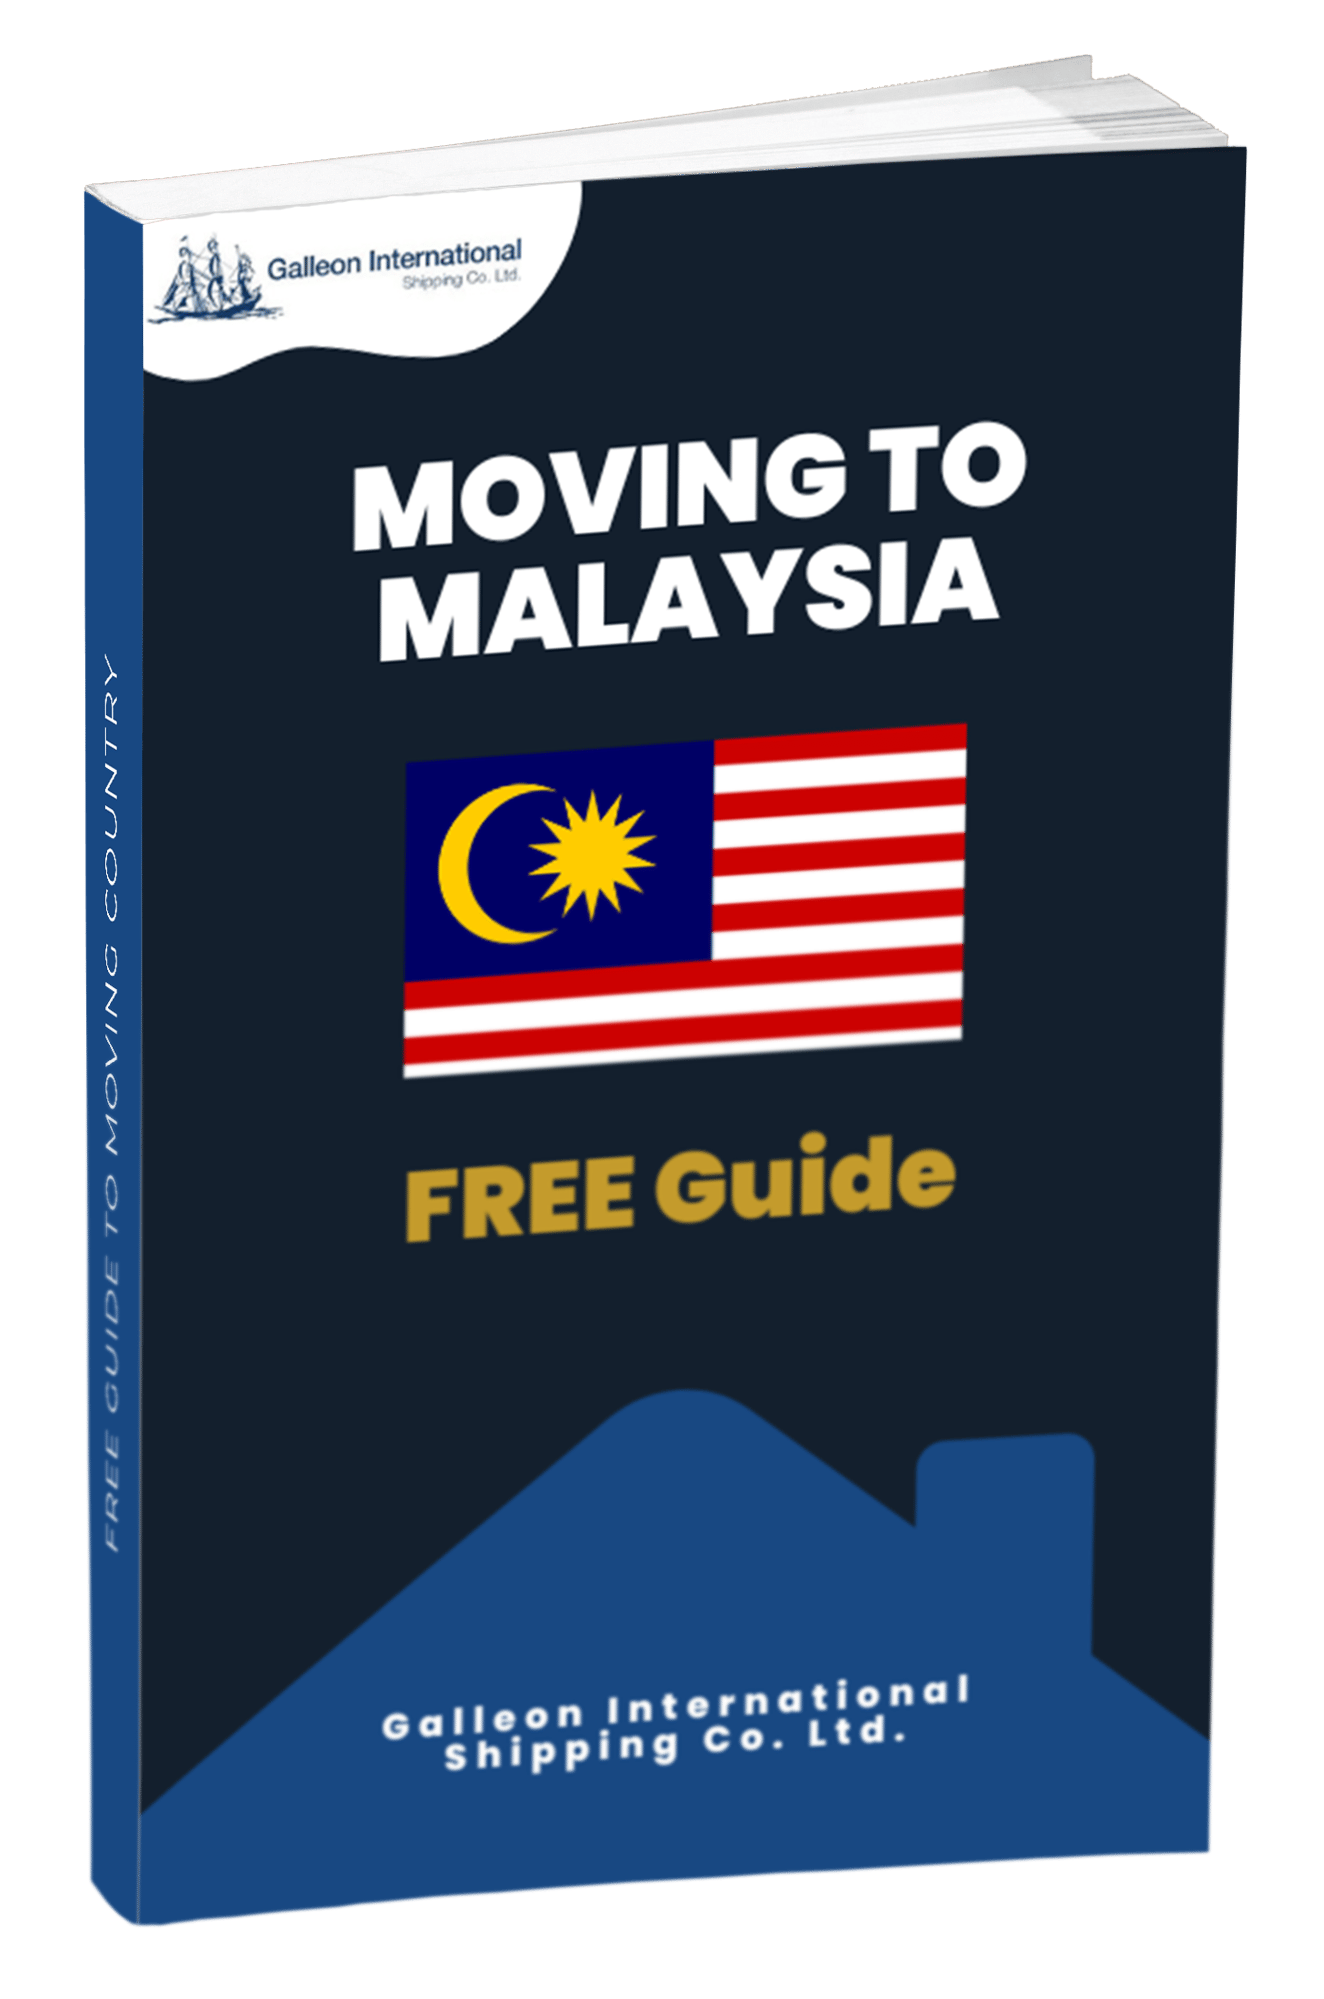 Malaysia Guide